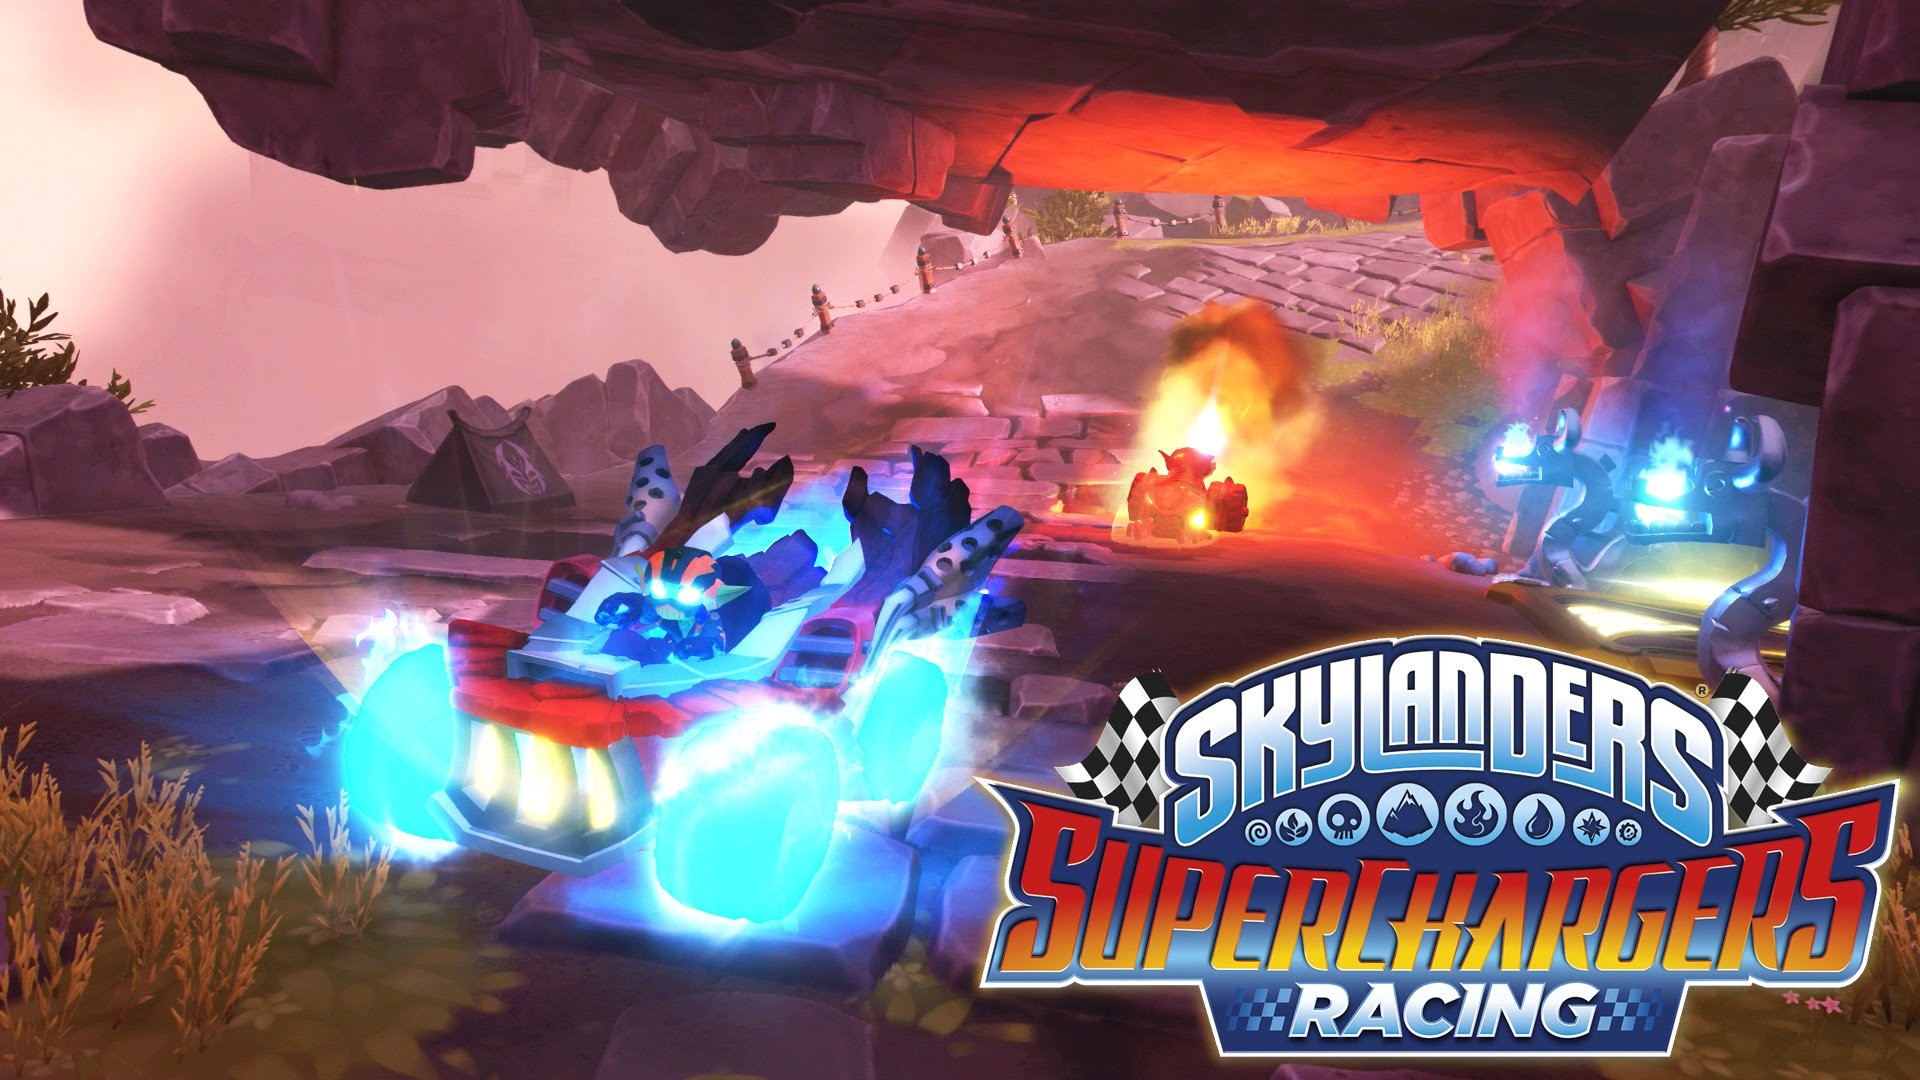 1920x1080 Skylanders SuperChargers Racing - Wii U, Wii & 3DS Game Analysis - YouTube